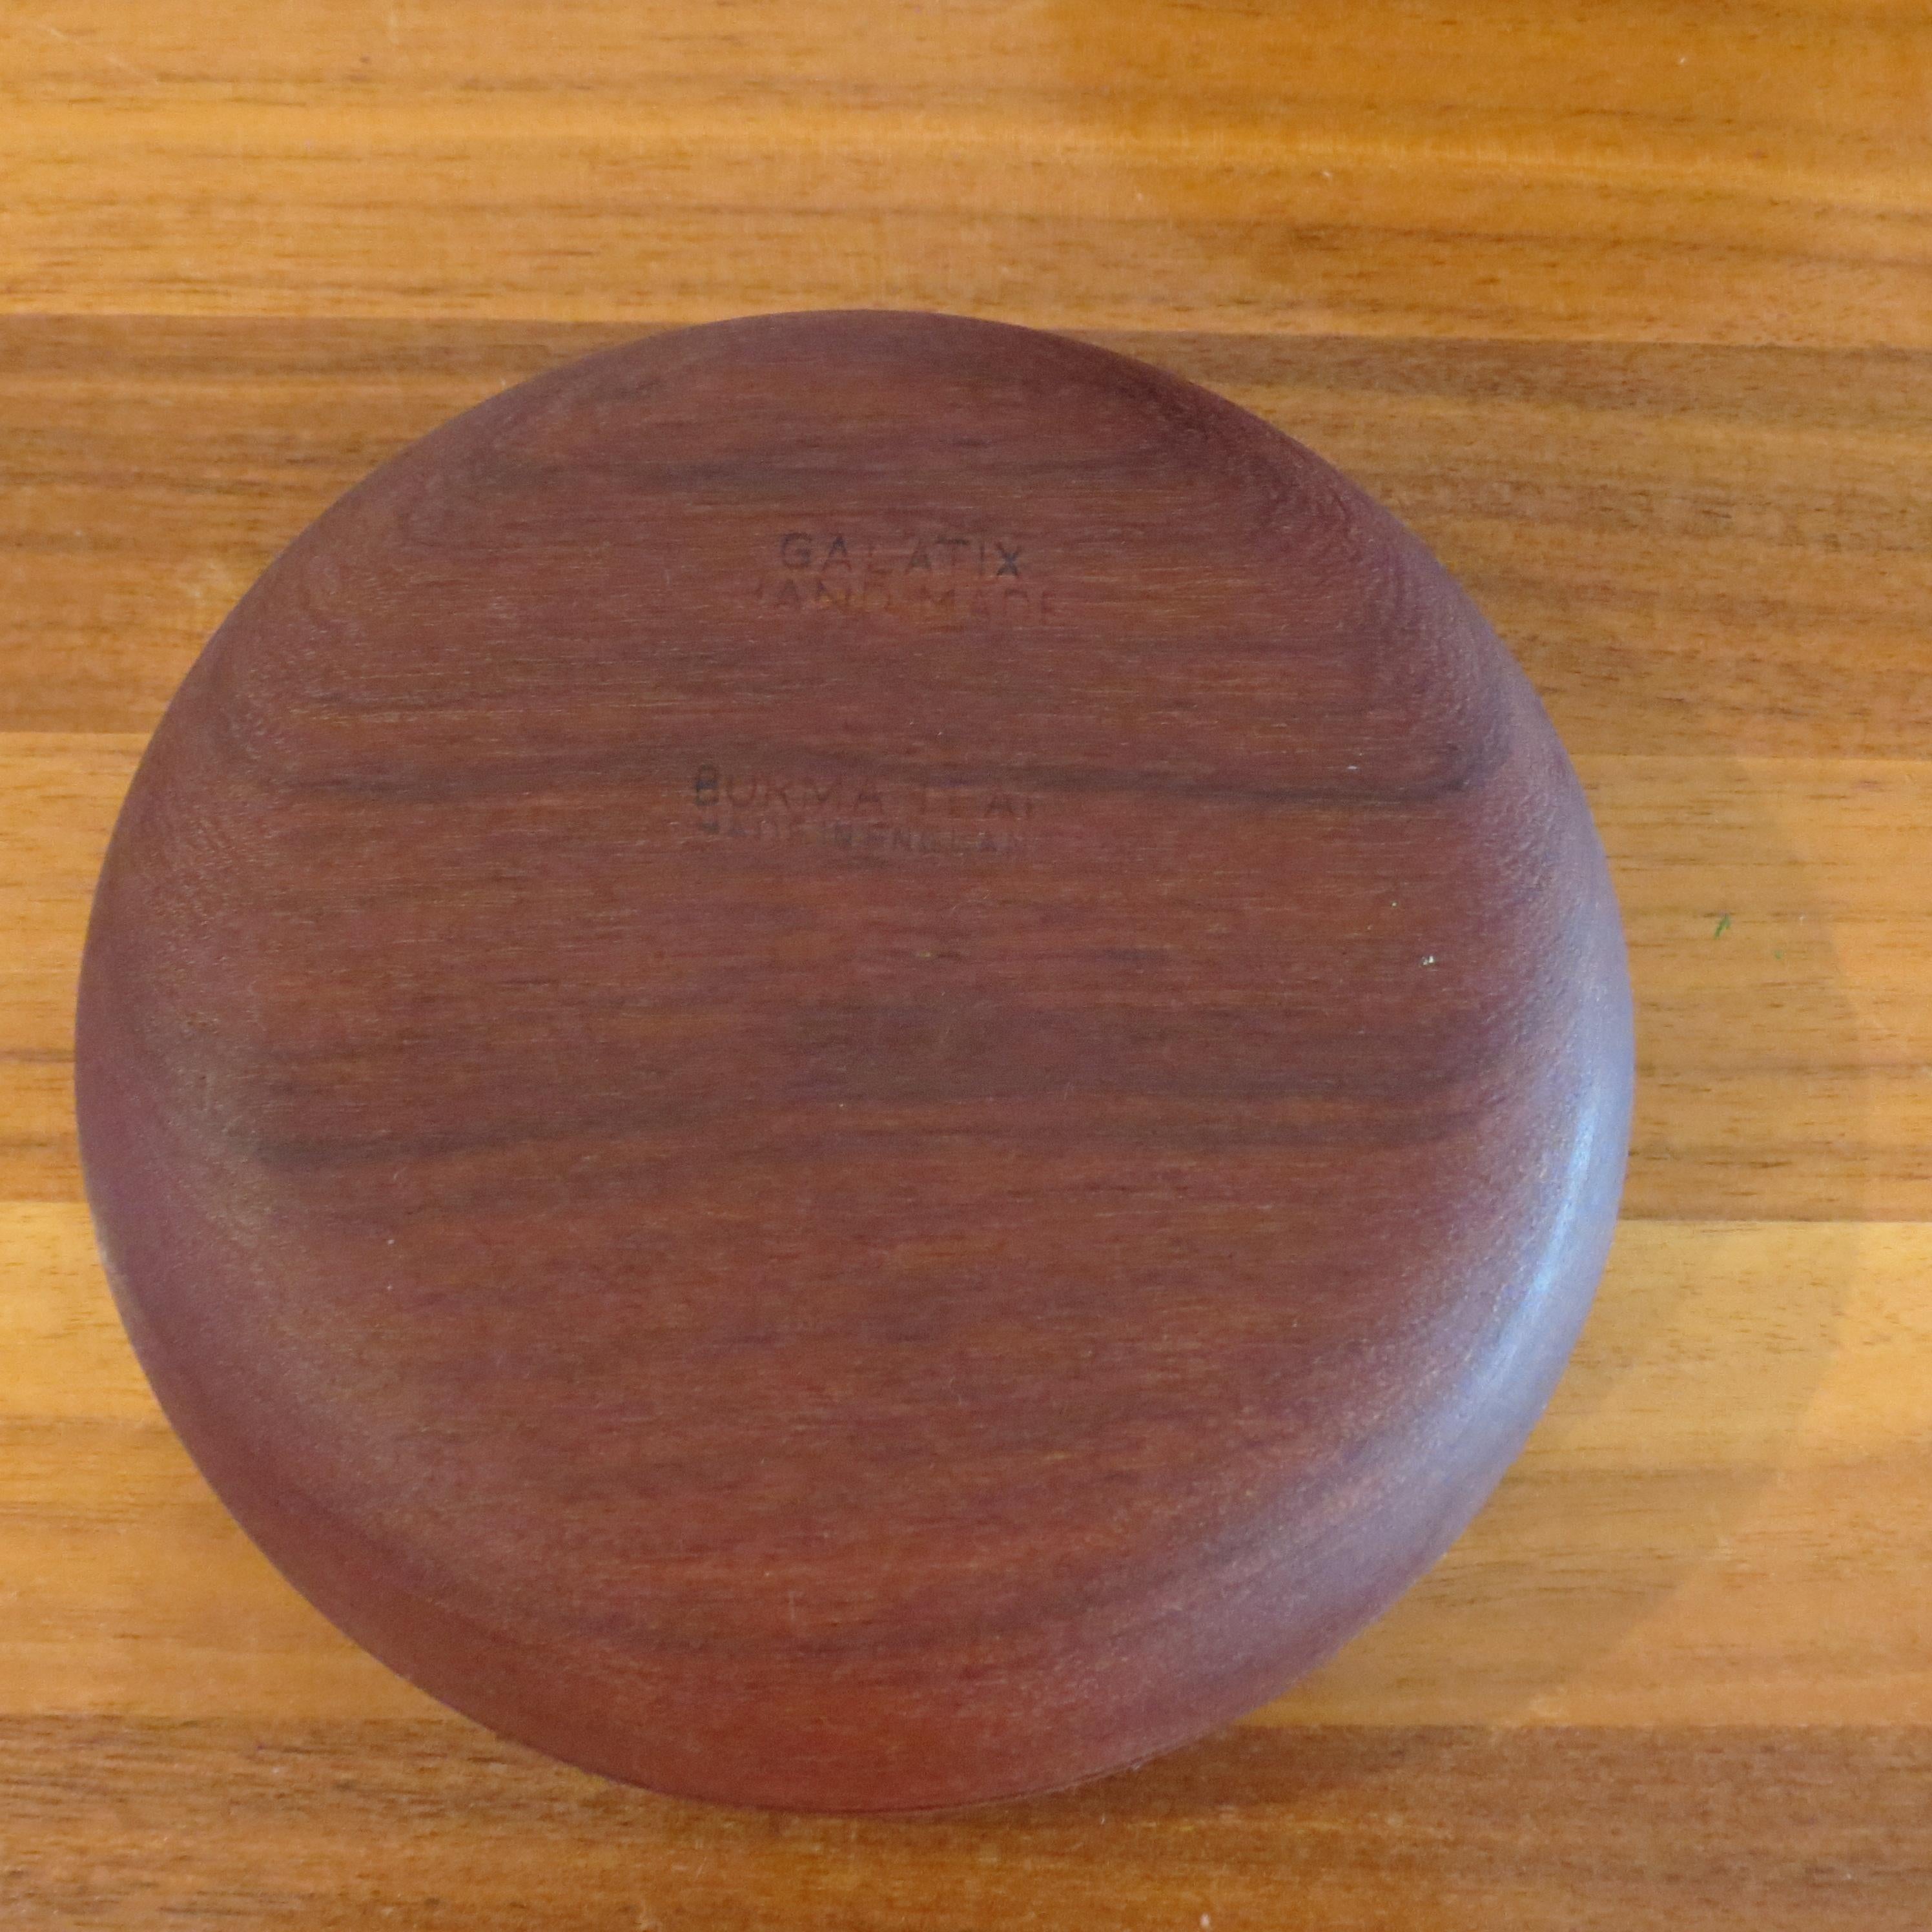 Hand-Crafted Set of 4 Vintage Handmade Teak Wooden Bowls by Galatix